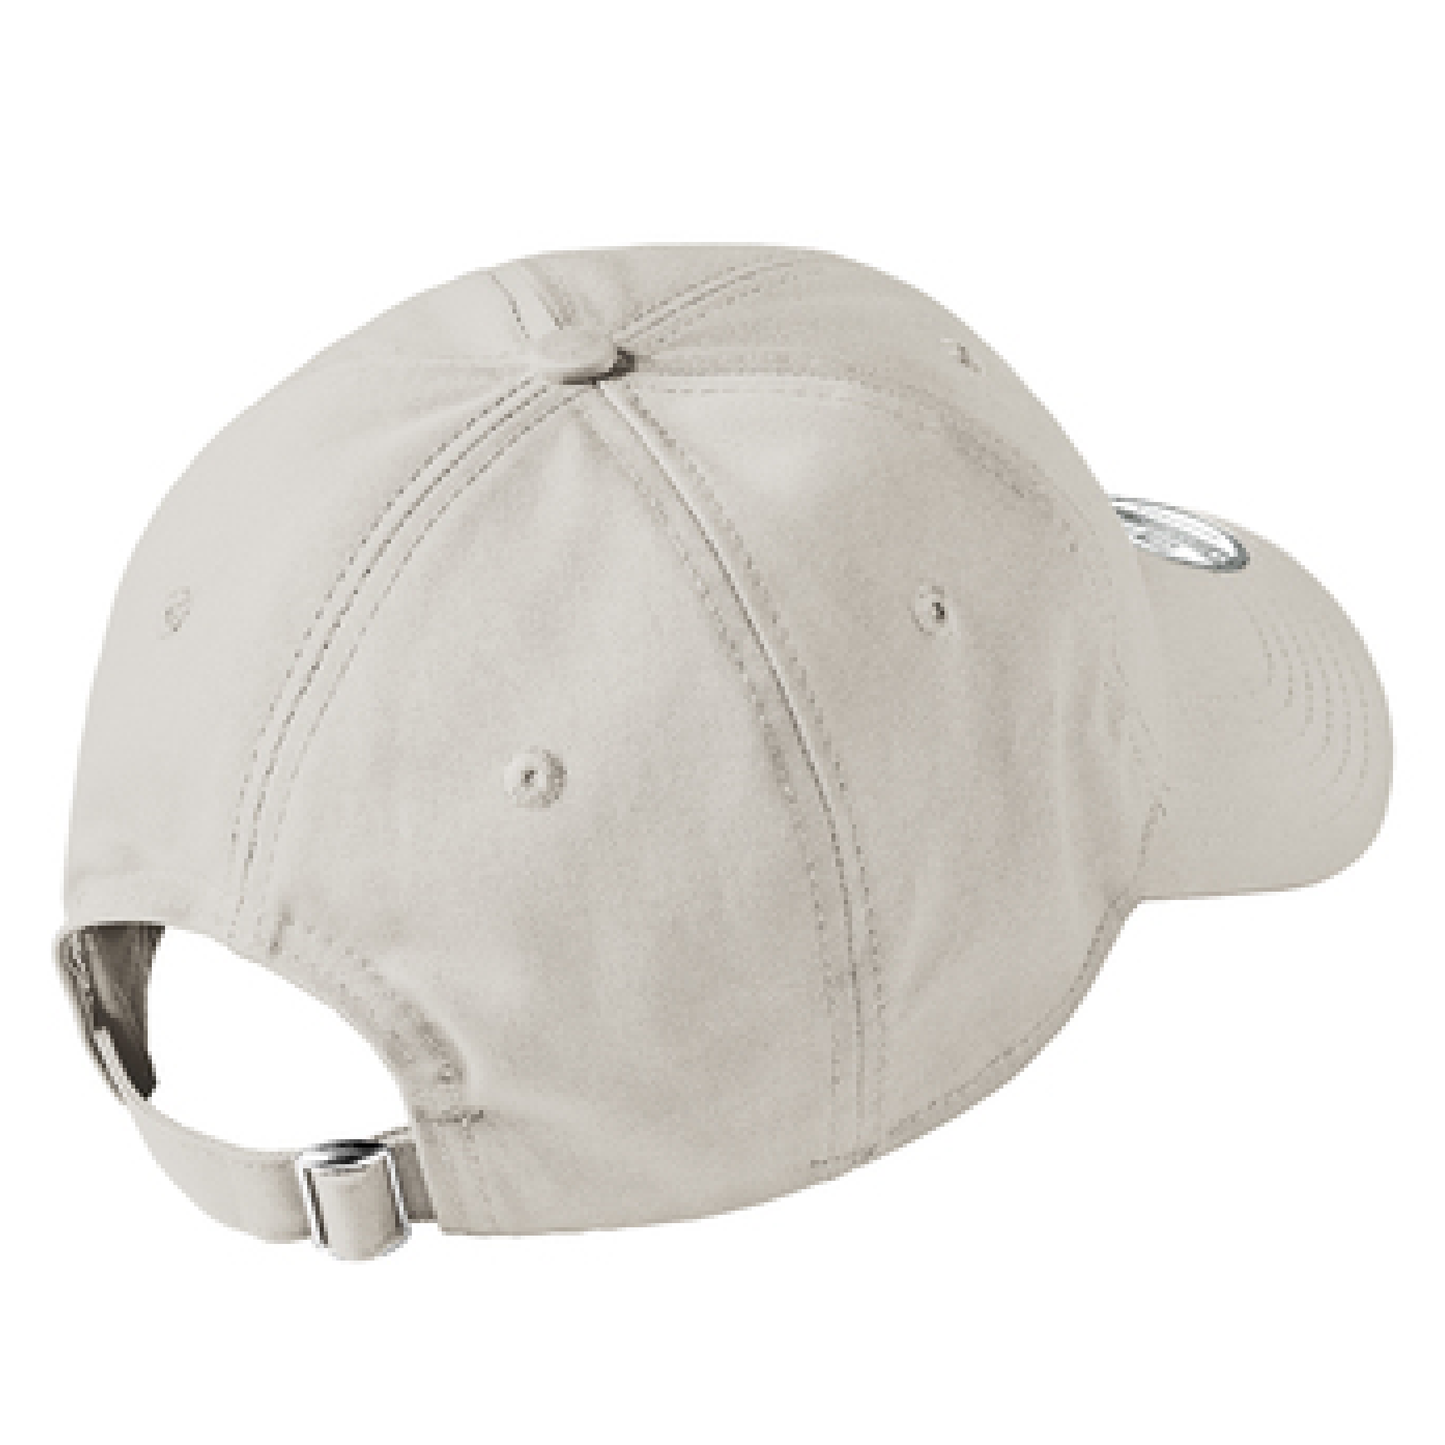 Millers Adjustable Unstructured Hat